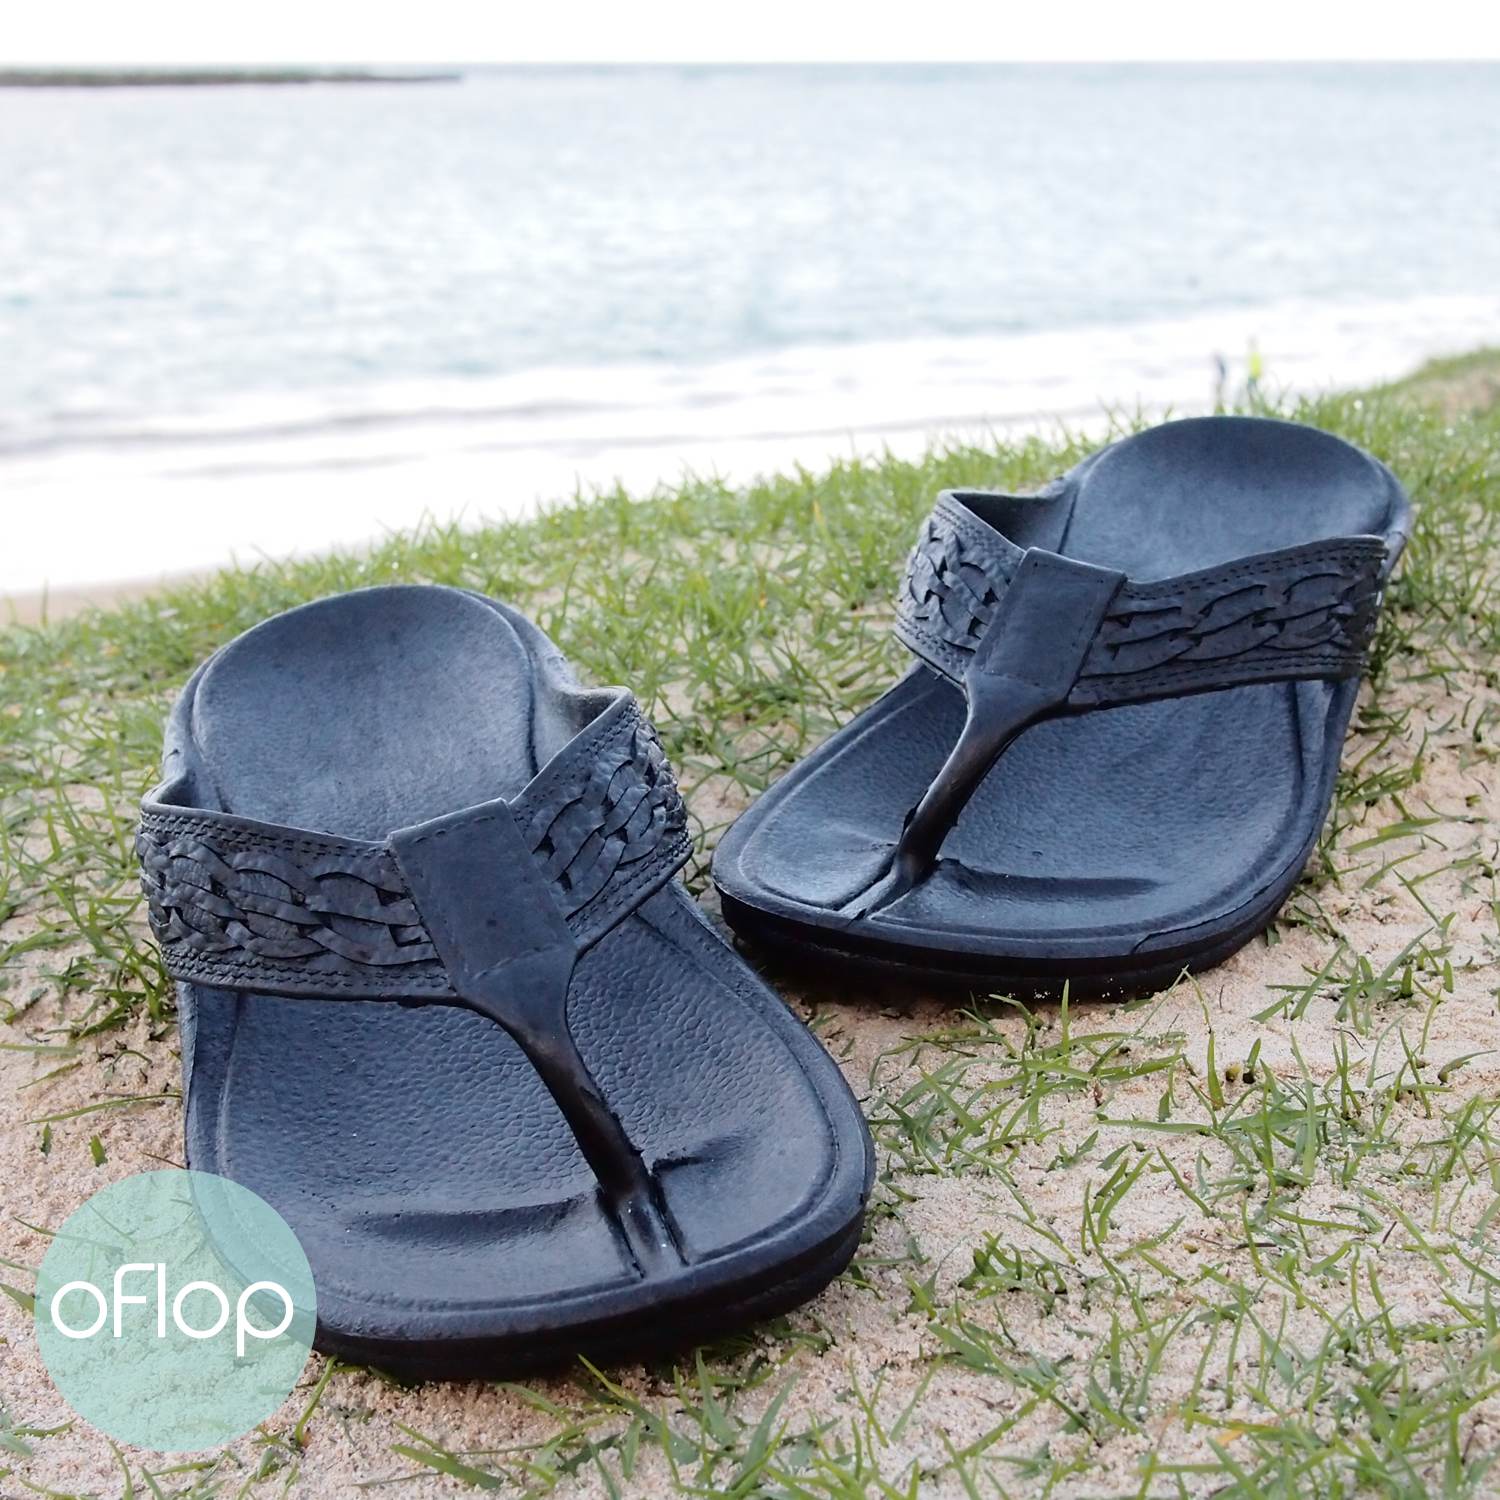 Pali Hawaii Shaka Sandals - Thong Jandals - oFlop